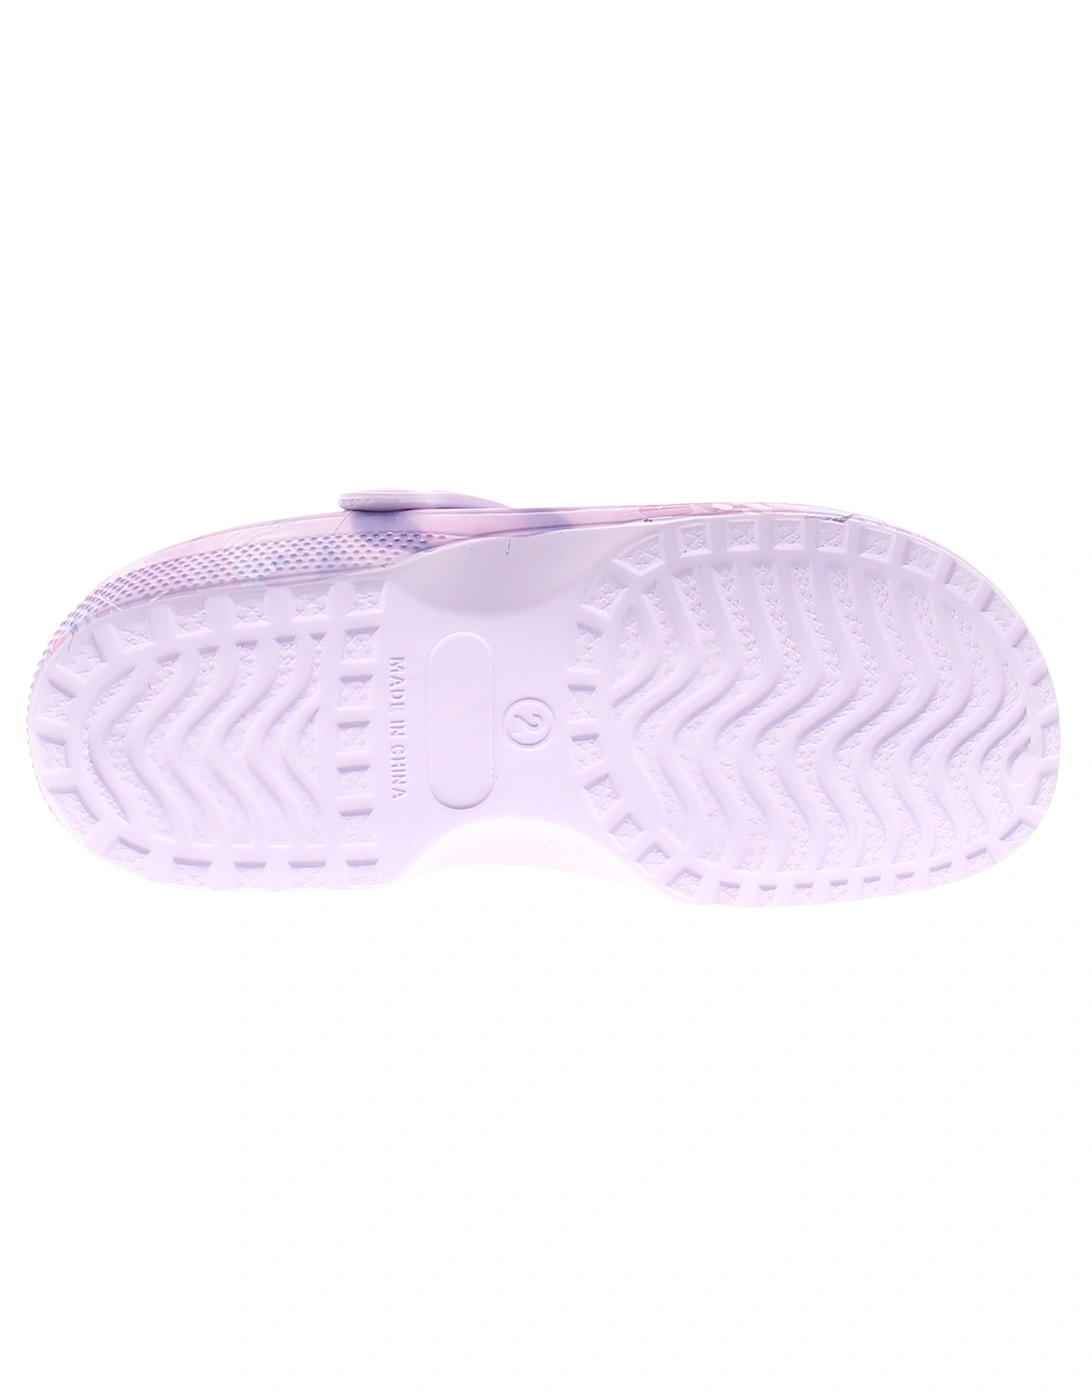 Younger Girls Sandals Sliders Clog purple UK Size